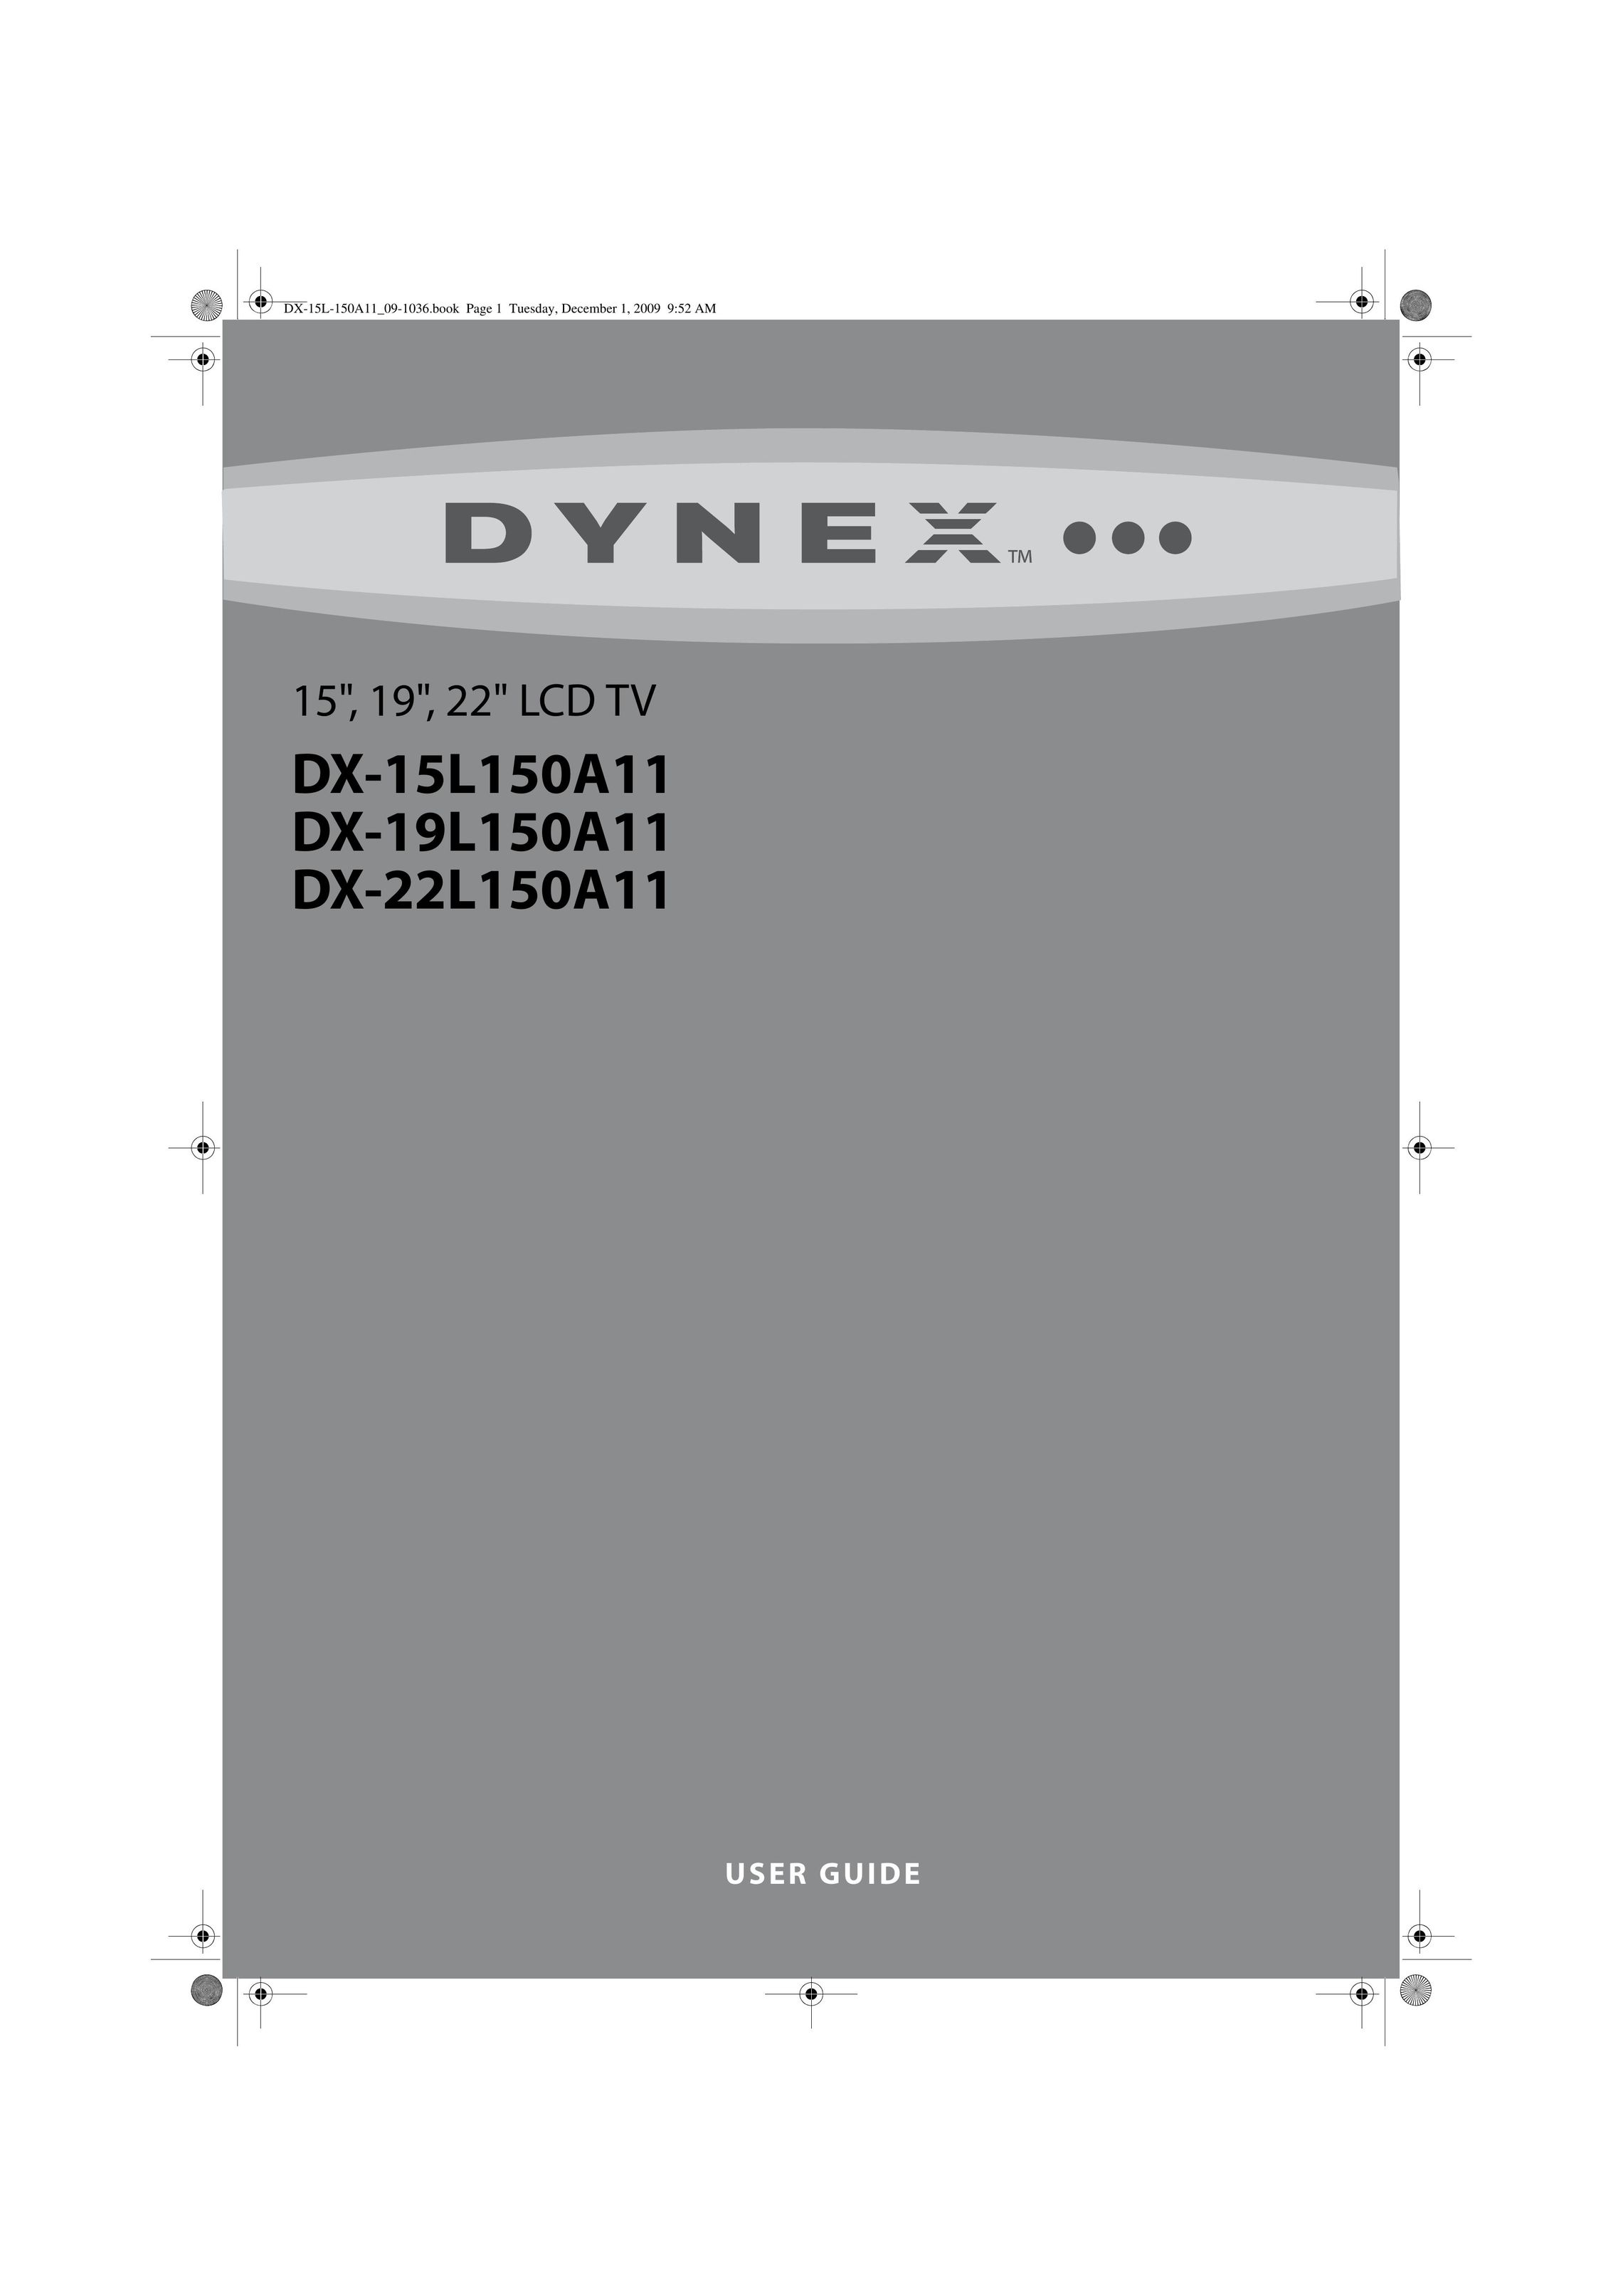 Dynex DX-22L150A11 Flat Panel Television User Manual